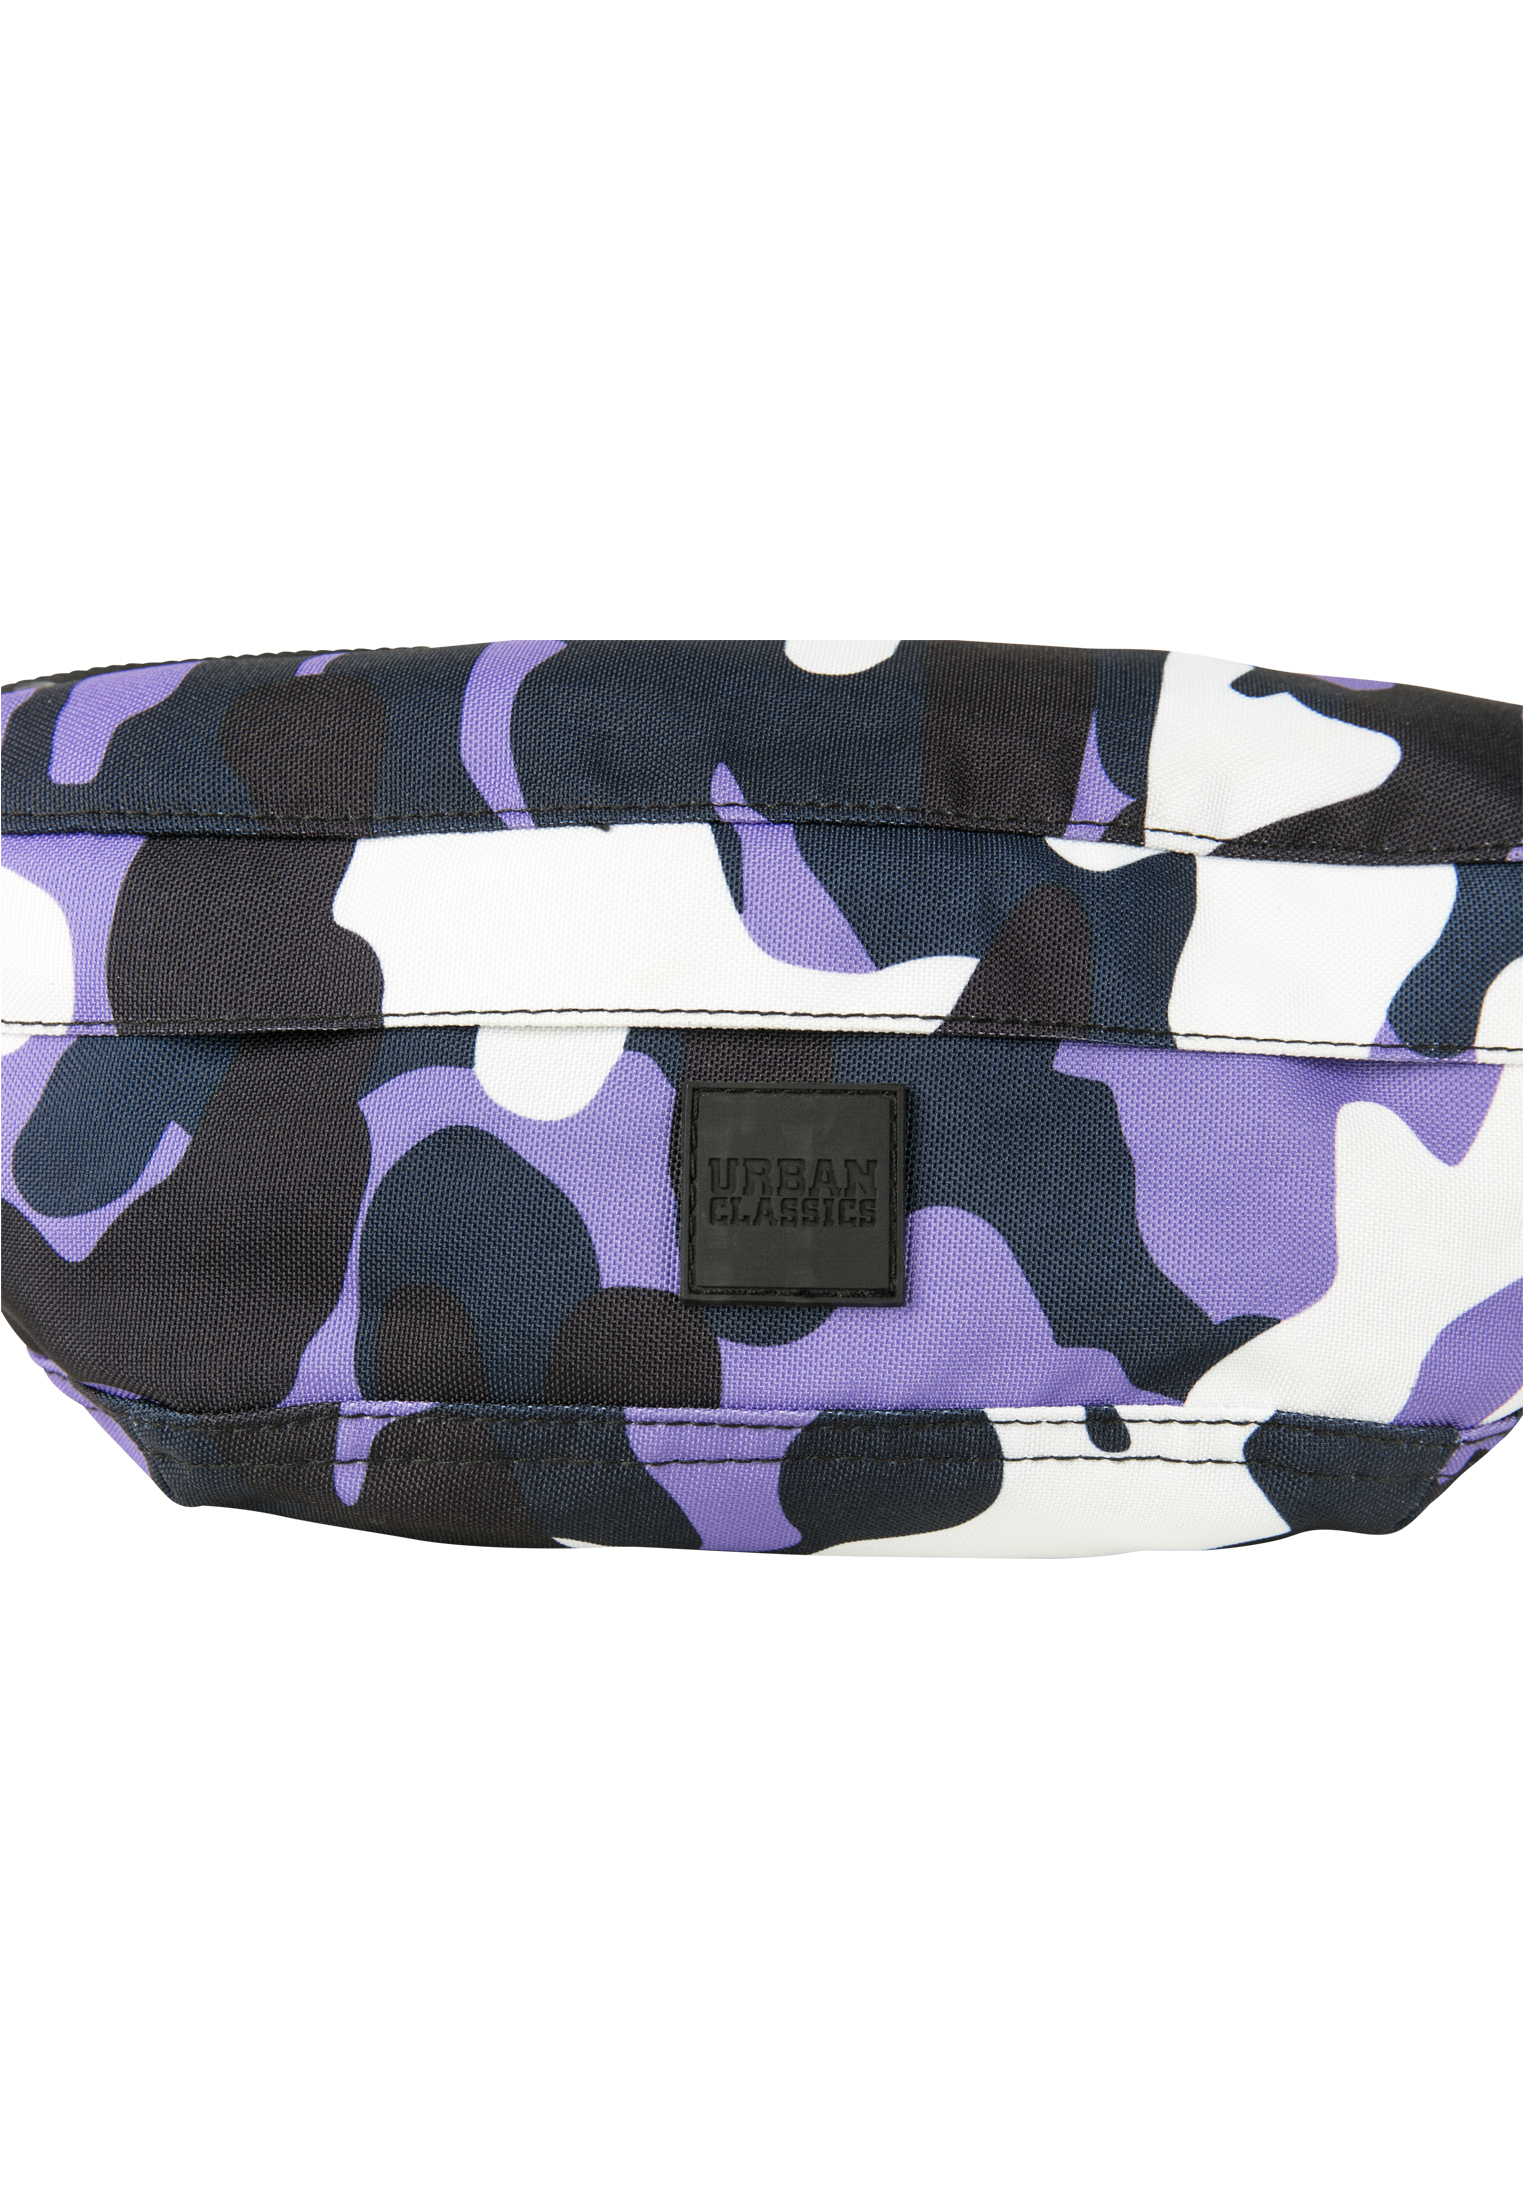 Taschen Camo Shoulder Bag in Farbe ultraviolet camo